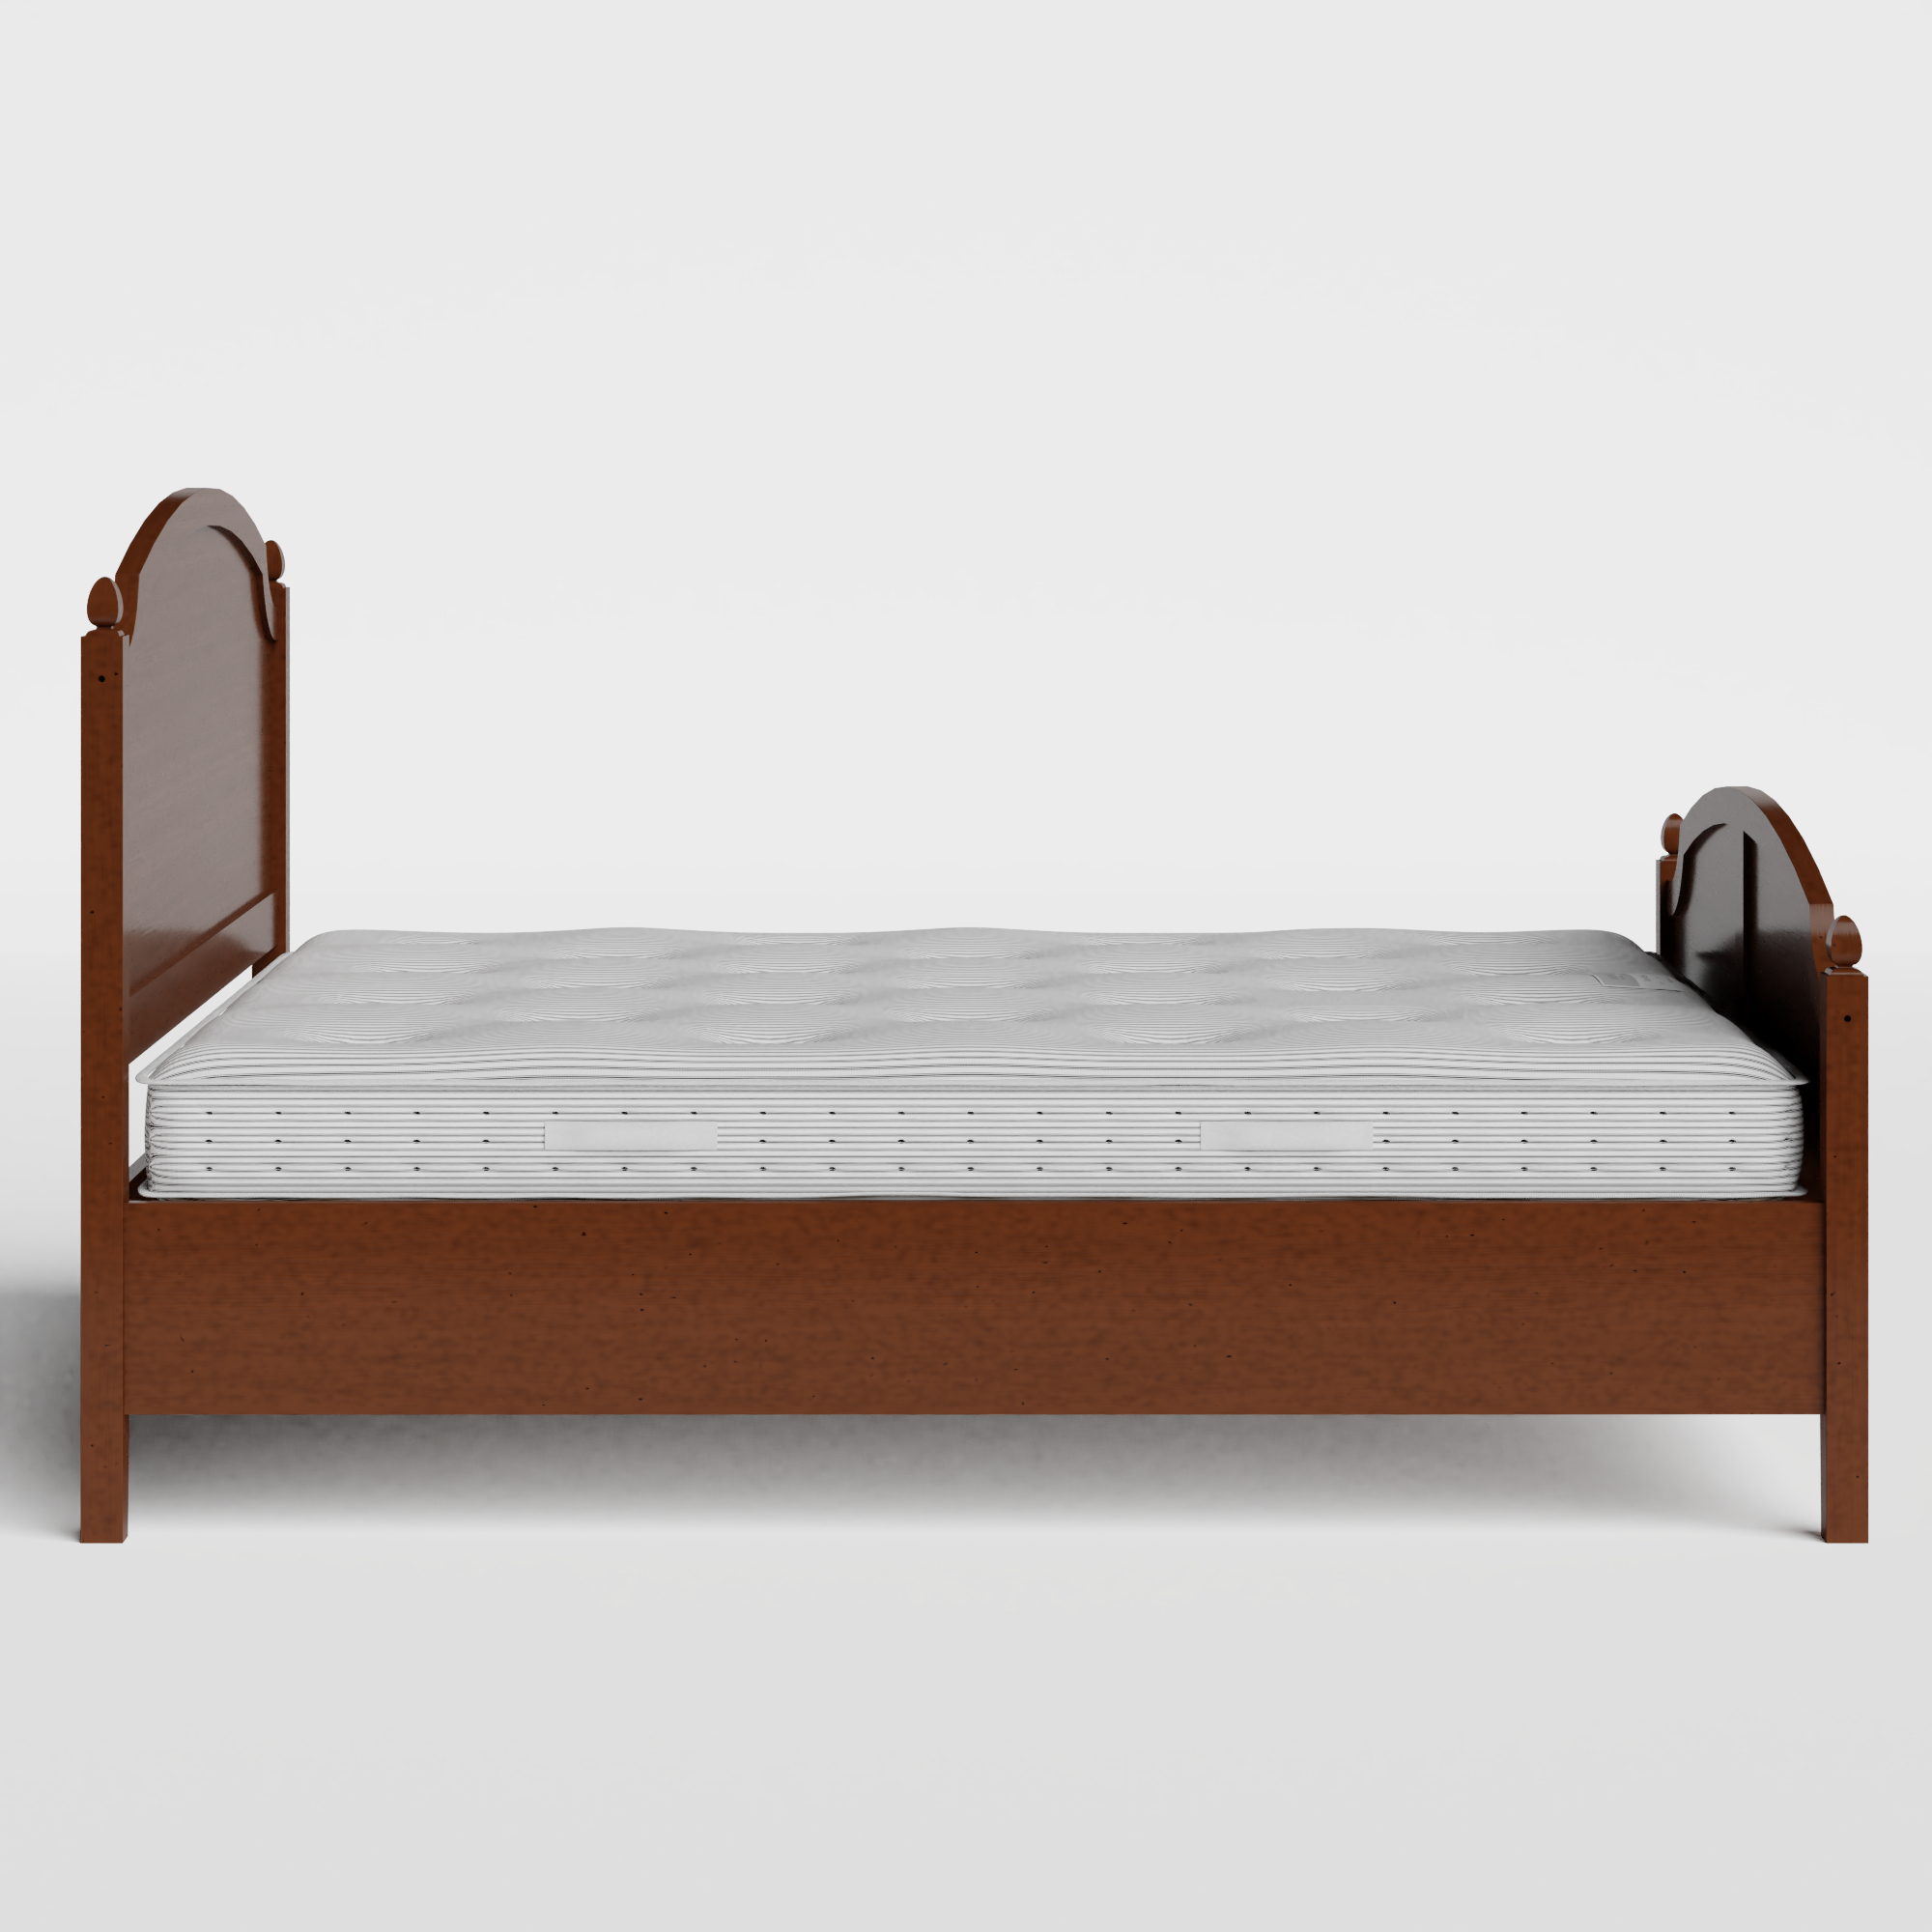 Kipling wood bed in dark cherry with Juno mattress